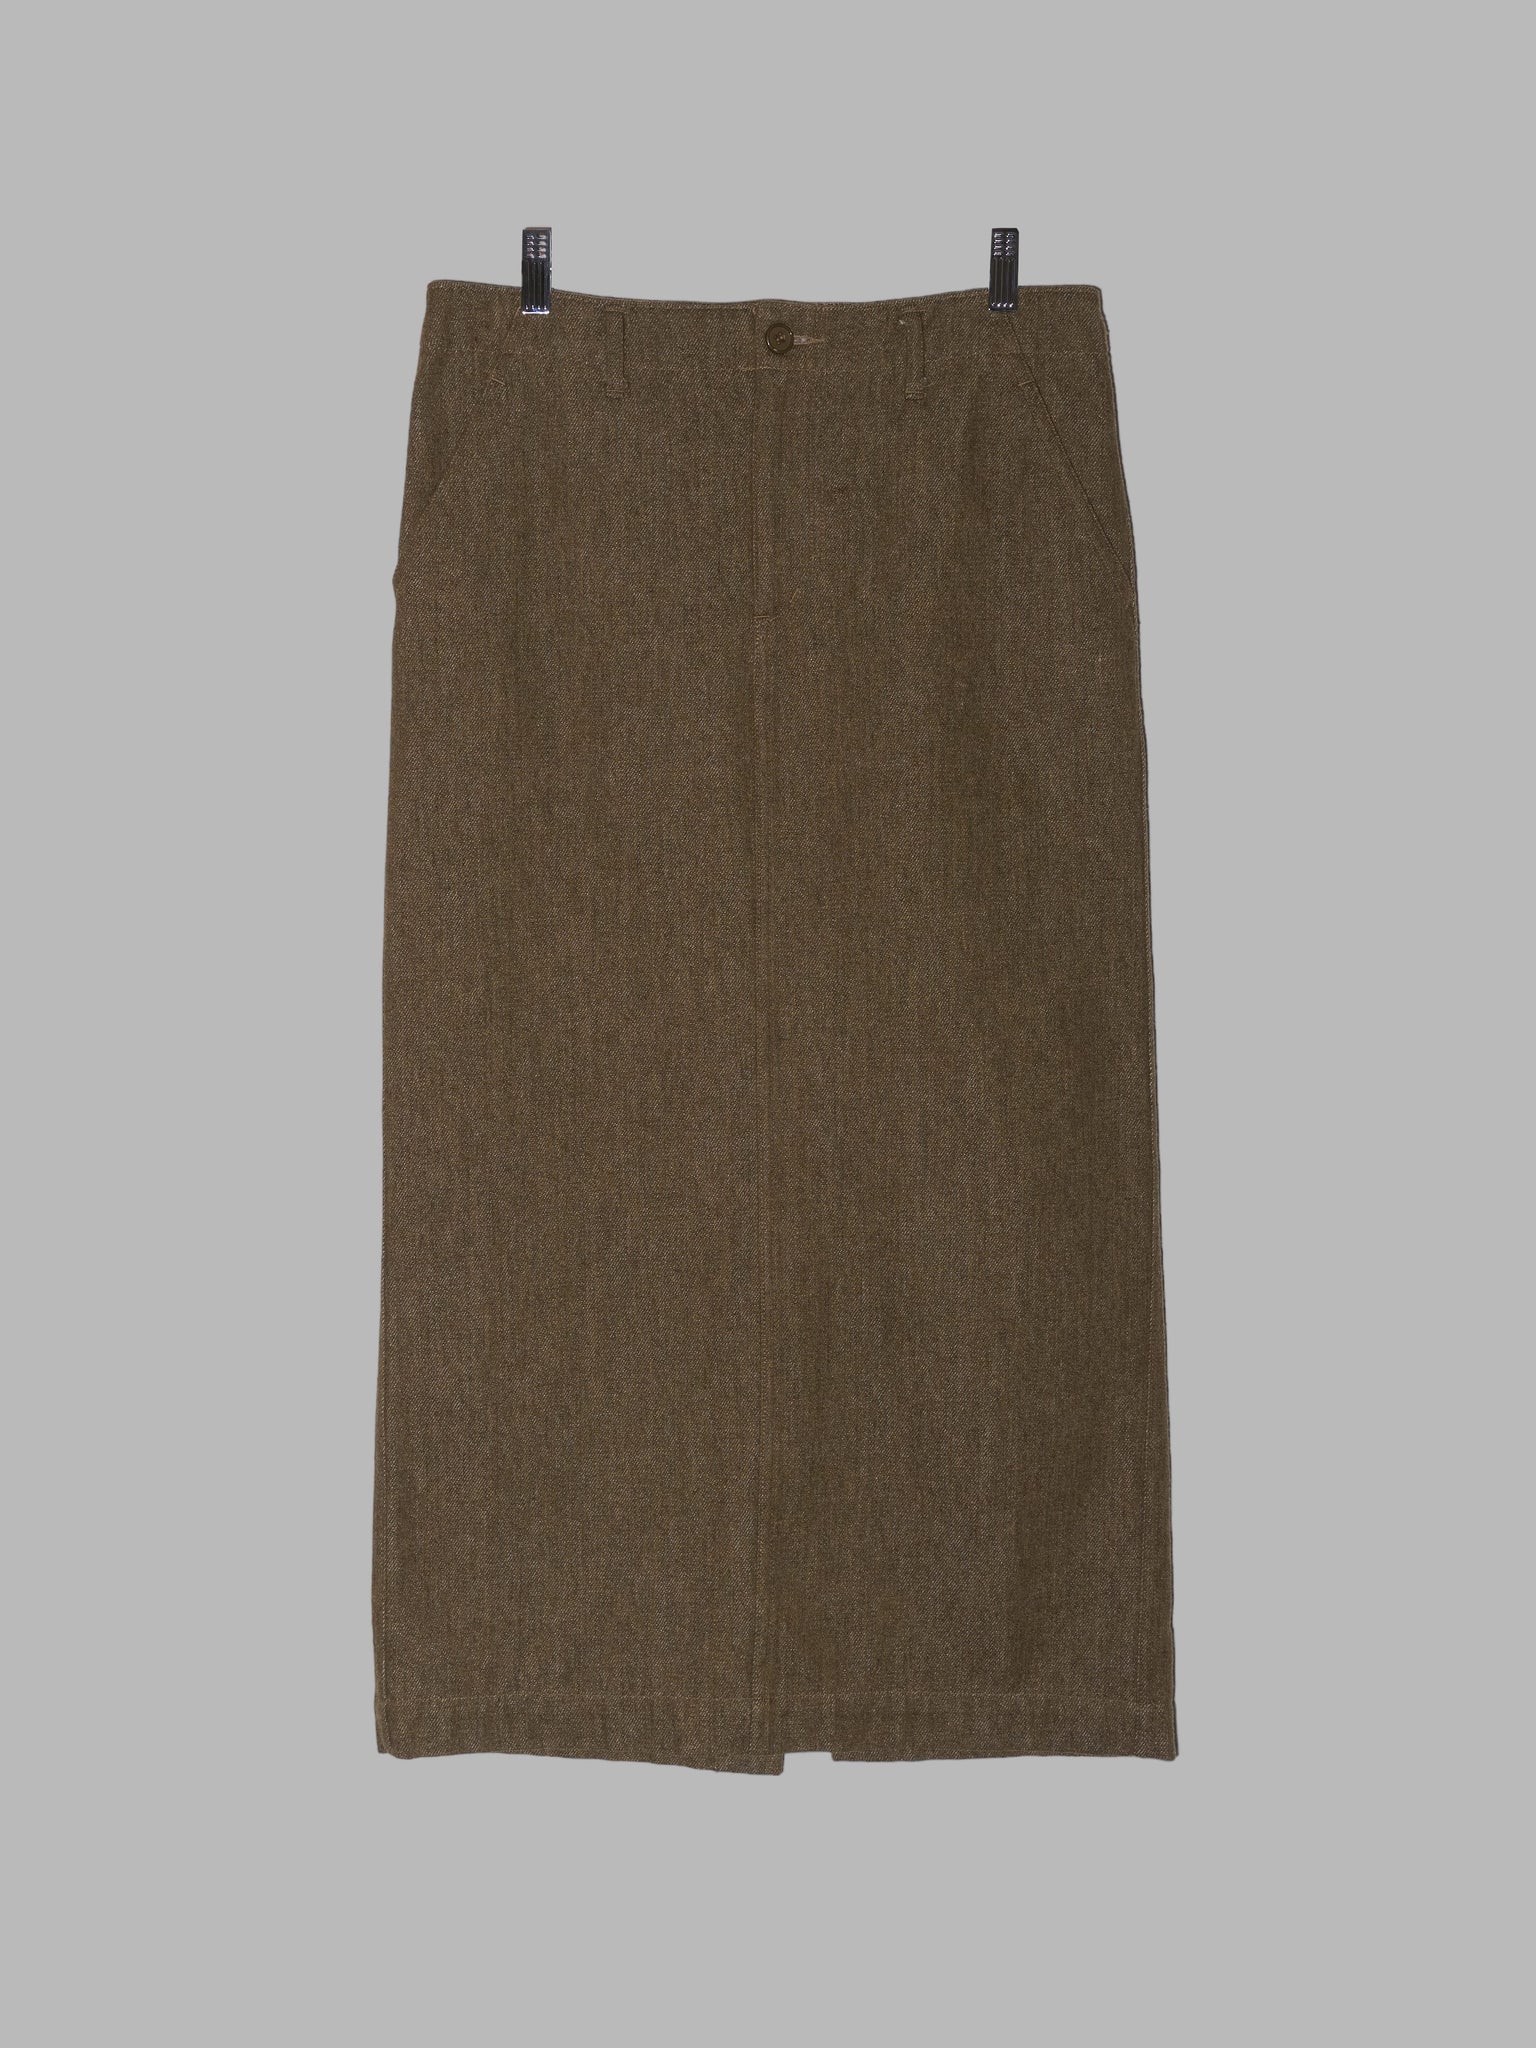 Junya Watanabe Comme des Garcons winter 1999 khaki brown wool denim maxi skirt - M